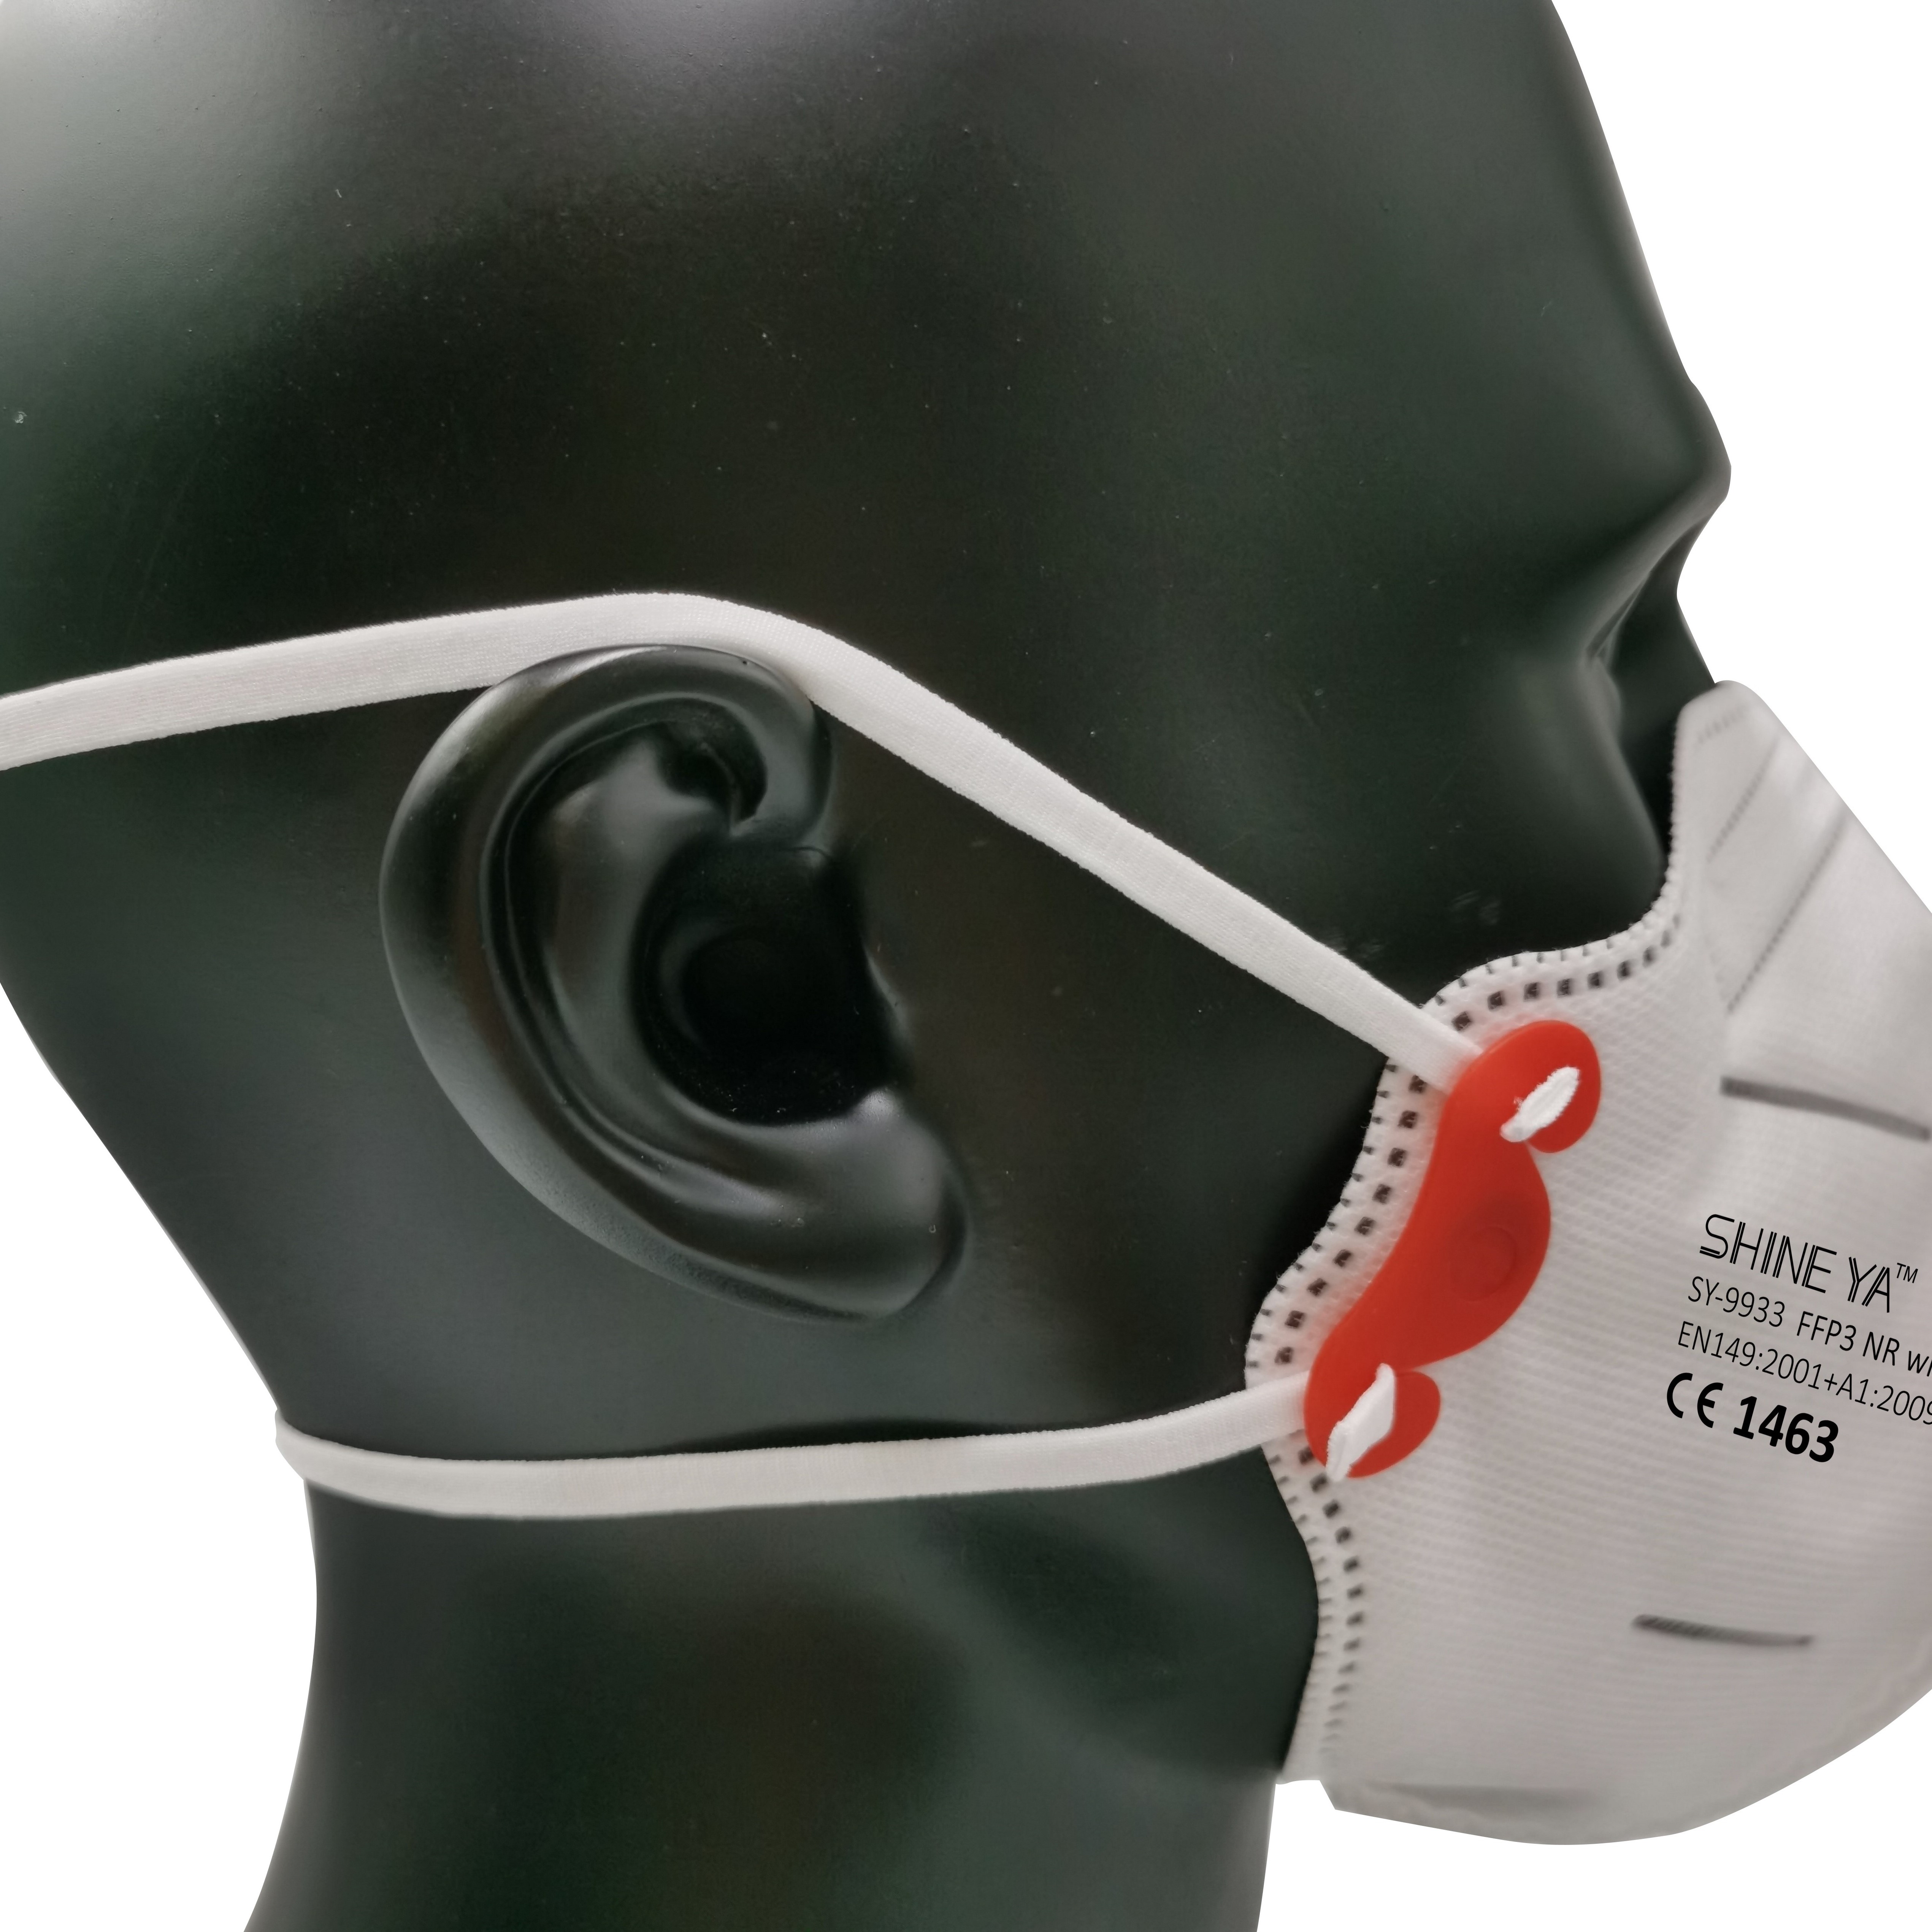 Rhycomme EU Whitelist PM2.5 EN149 CE P3 FFP3 NR Particulate Masks Masques Maschera With Valve